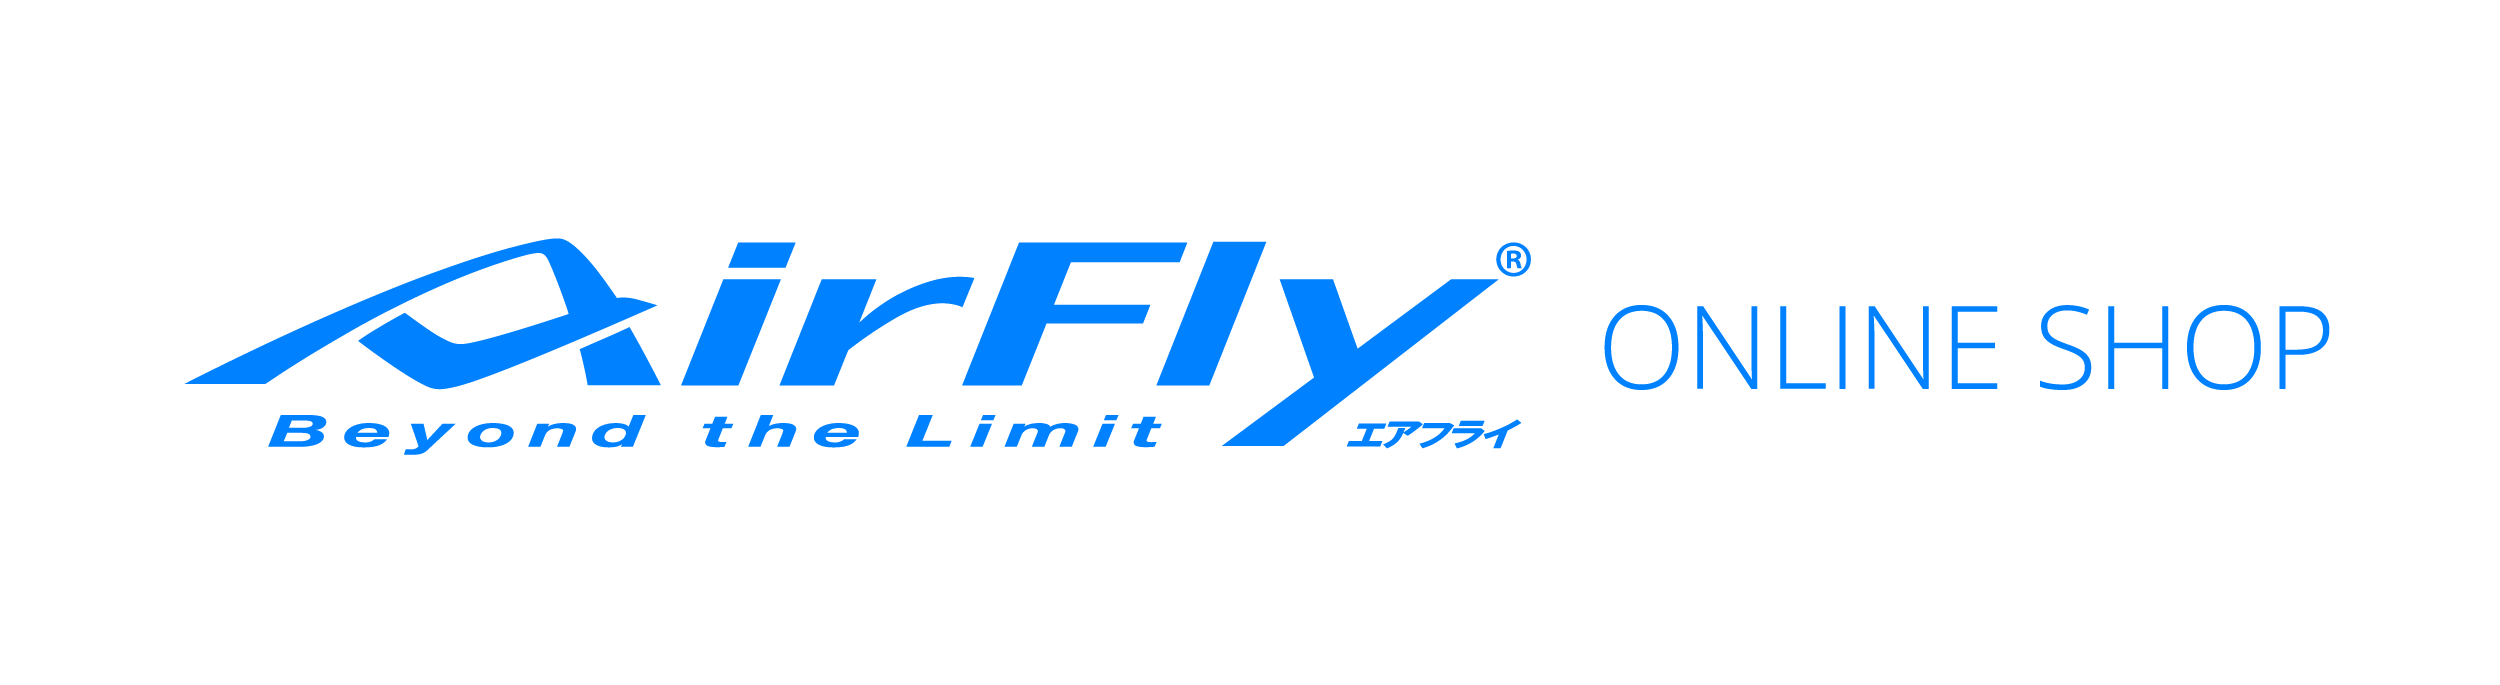 airfry-logo